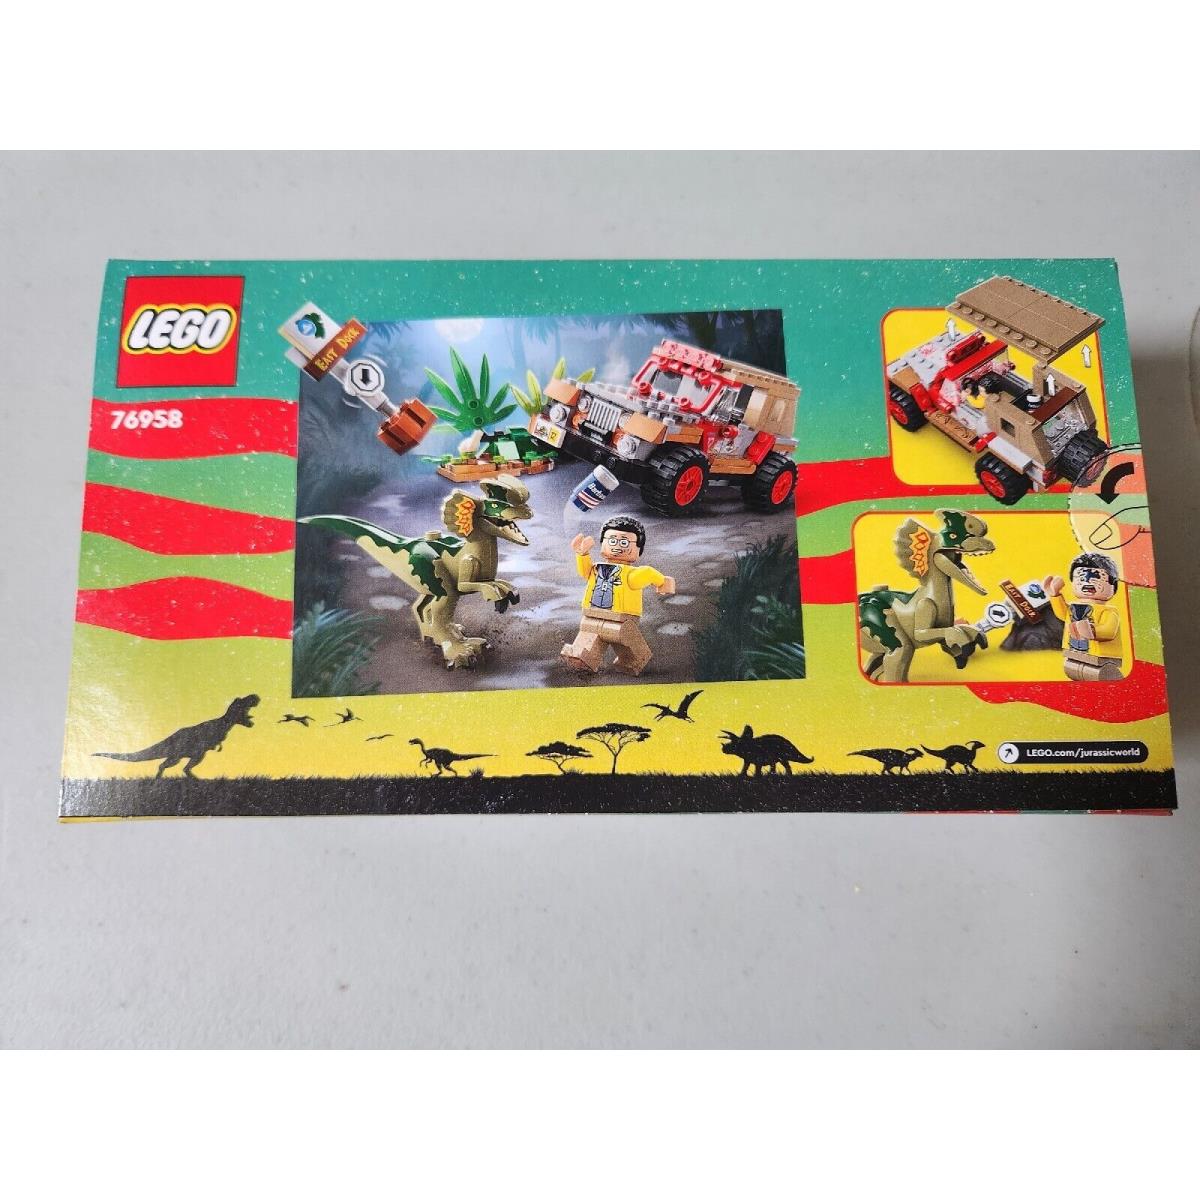 Lego Jurassic Park 76958 Dilophosaurus Ambush Buildable Toy / Returns